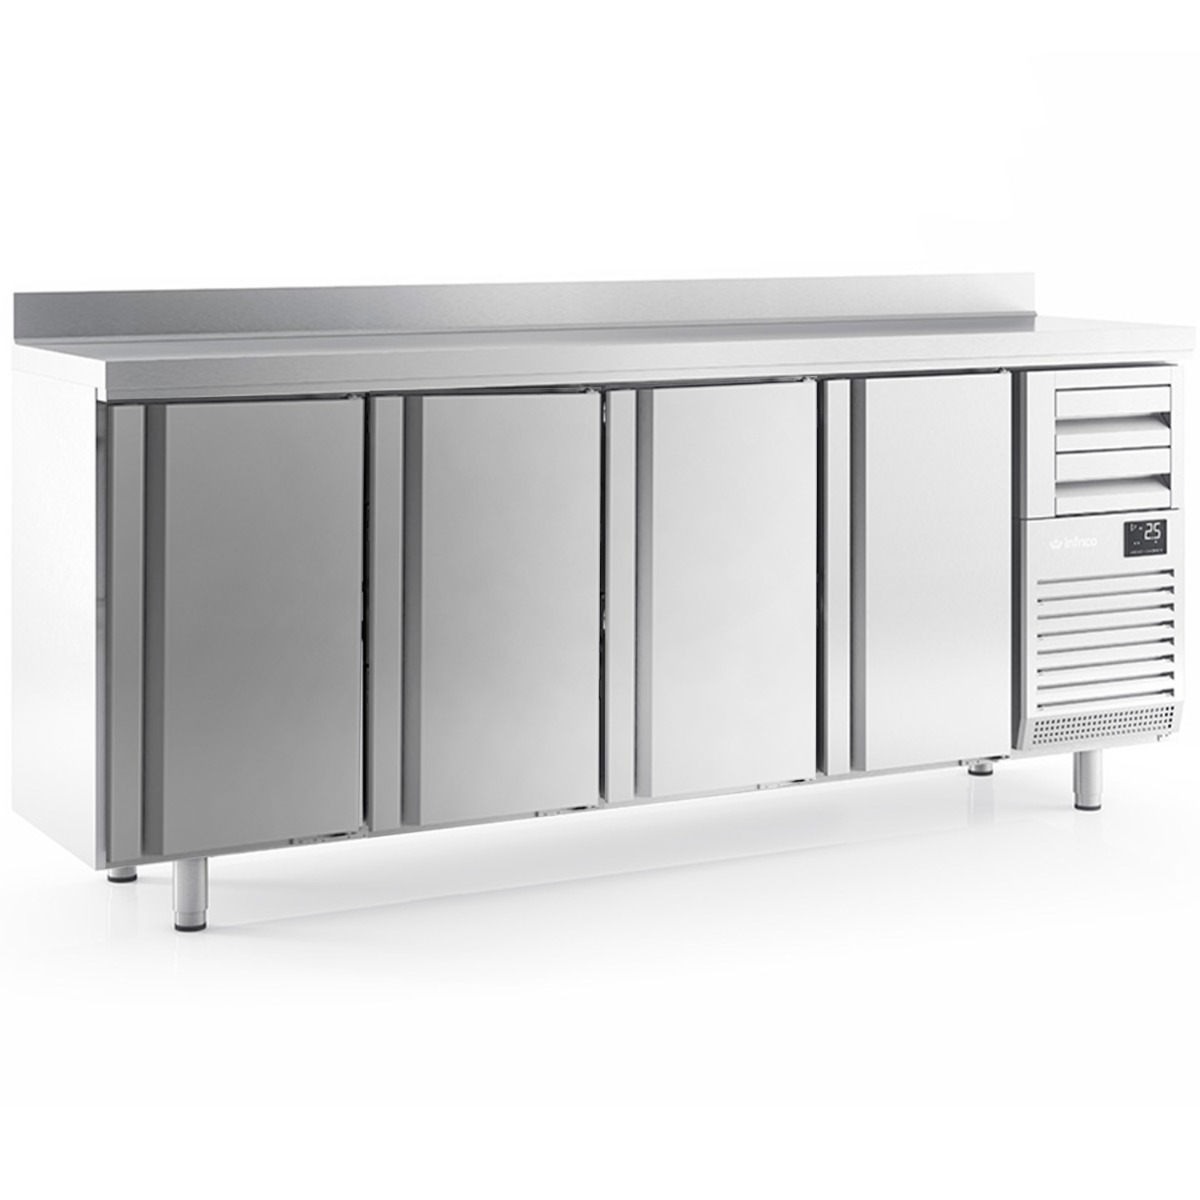 INFRICO 4 Door Tall Back Bar Counter with Upstand 695L - FMPP2500